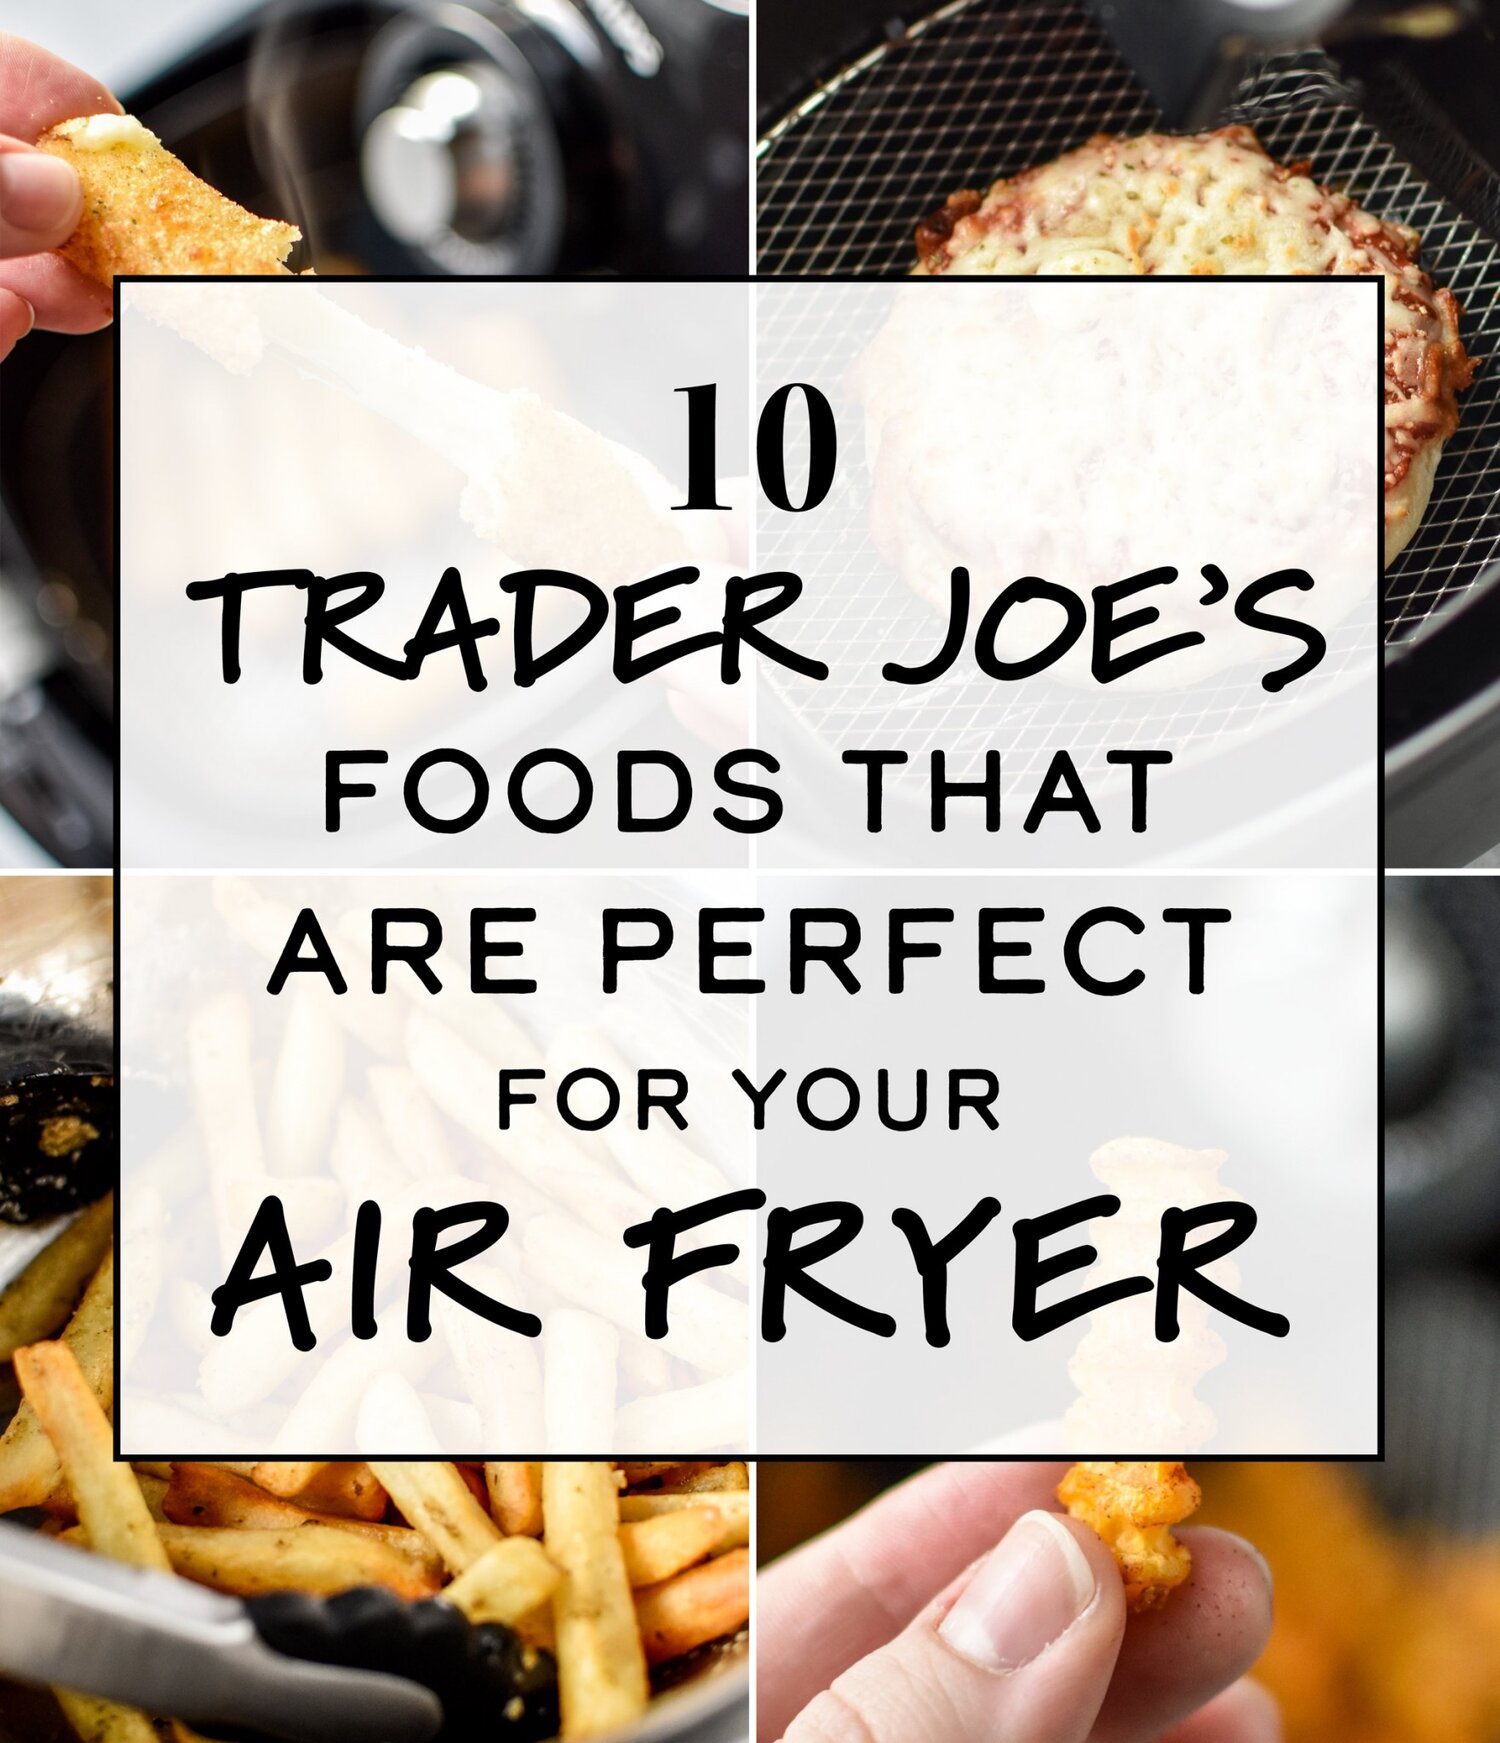 Trader Joes Hashbrown Air Fryer: Crispy Delights!